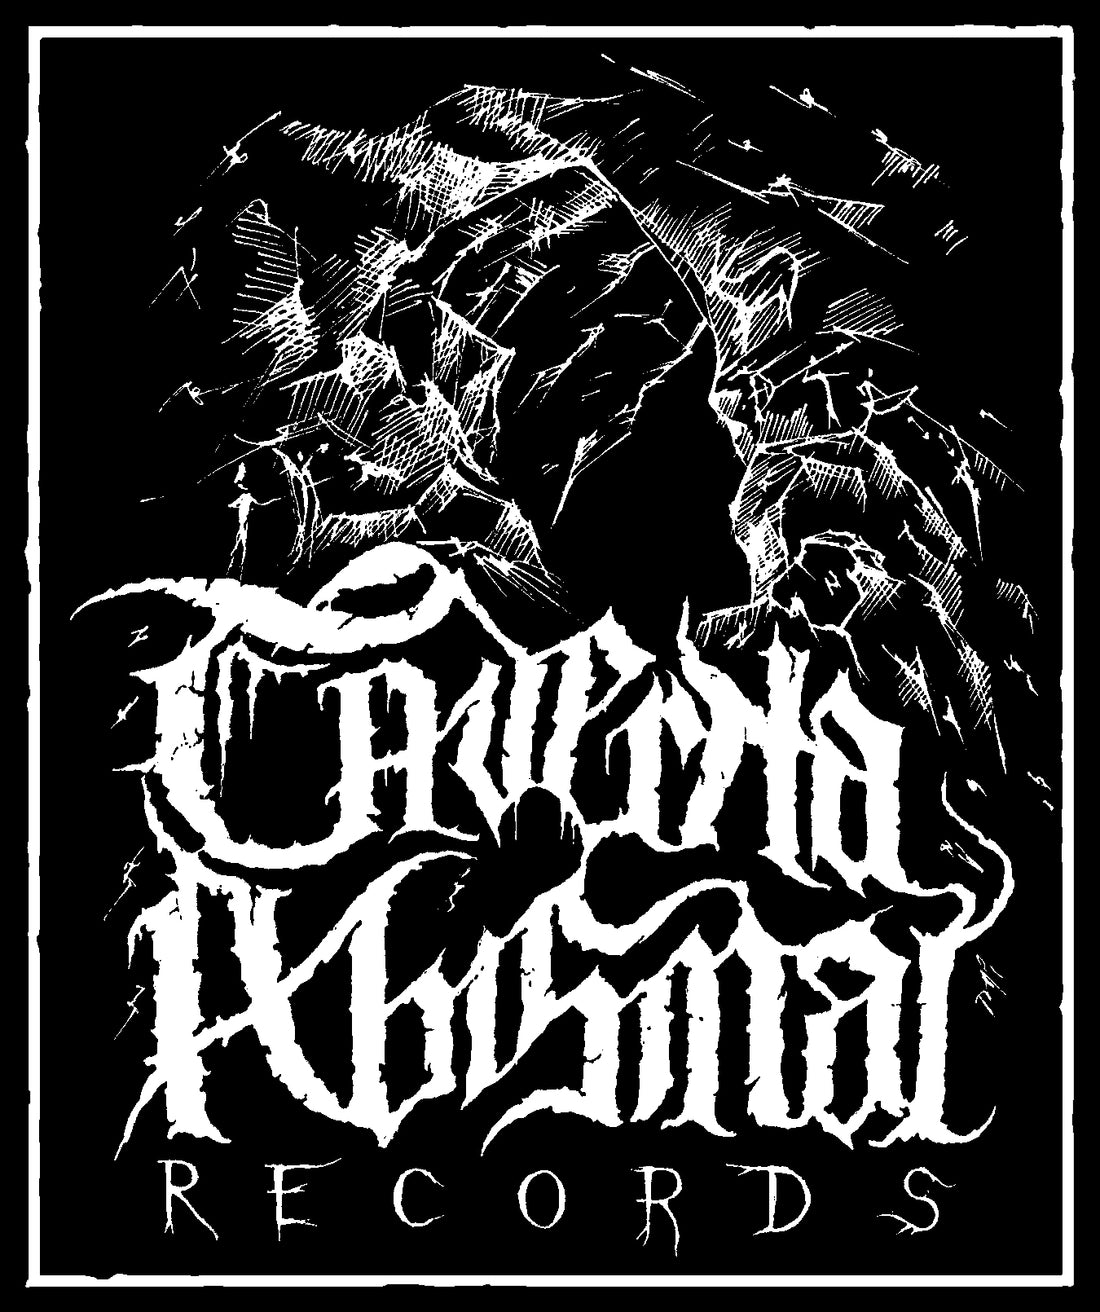 CAVERNA ABISMAL RECORDS - 15 years!!